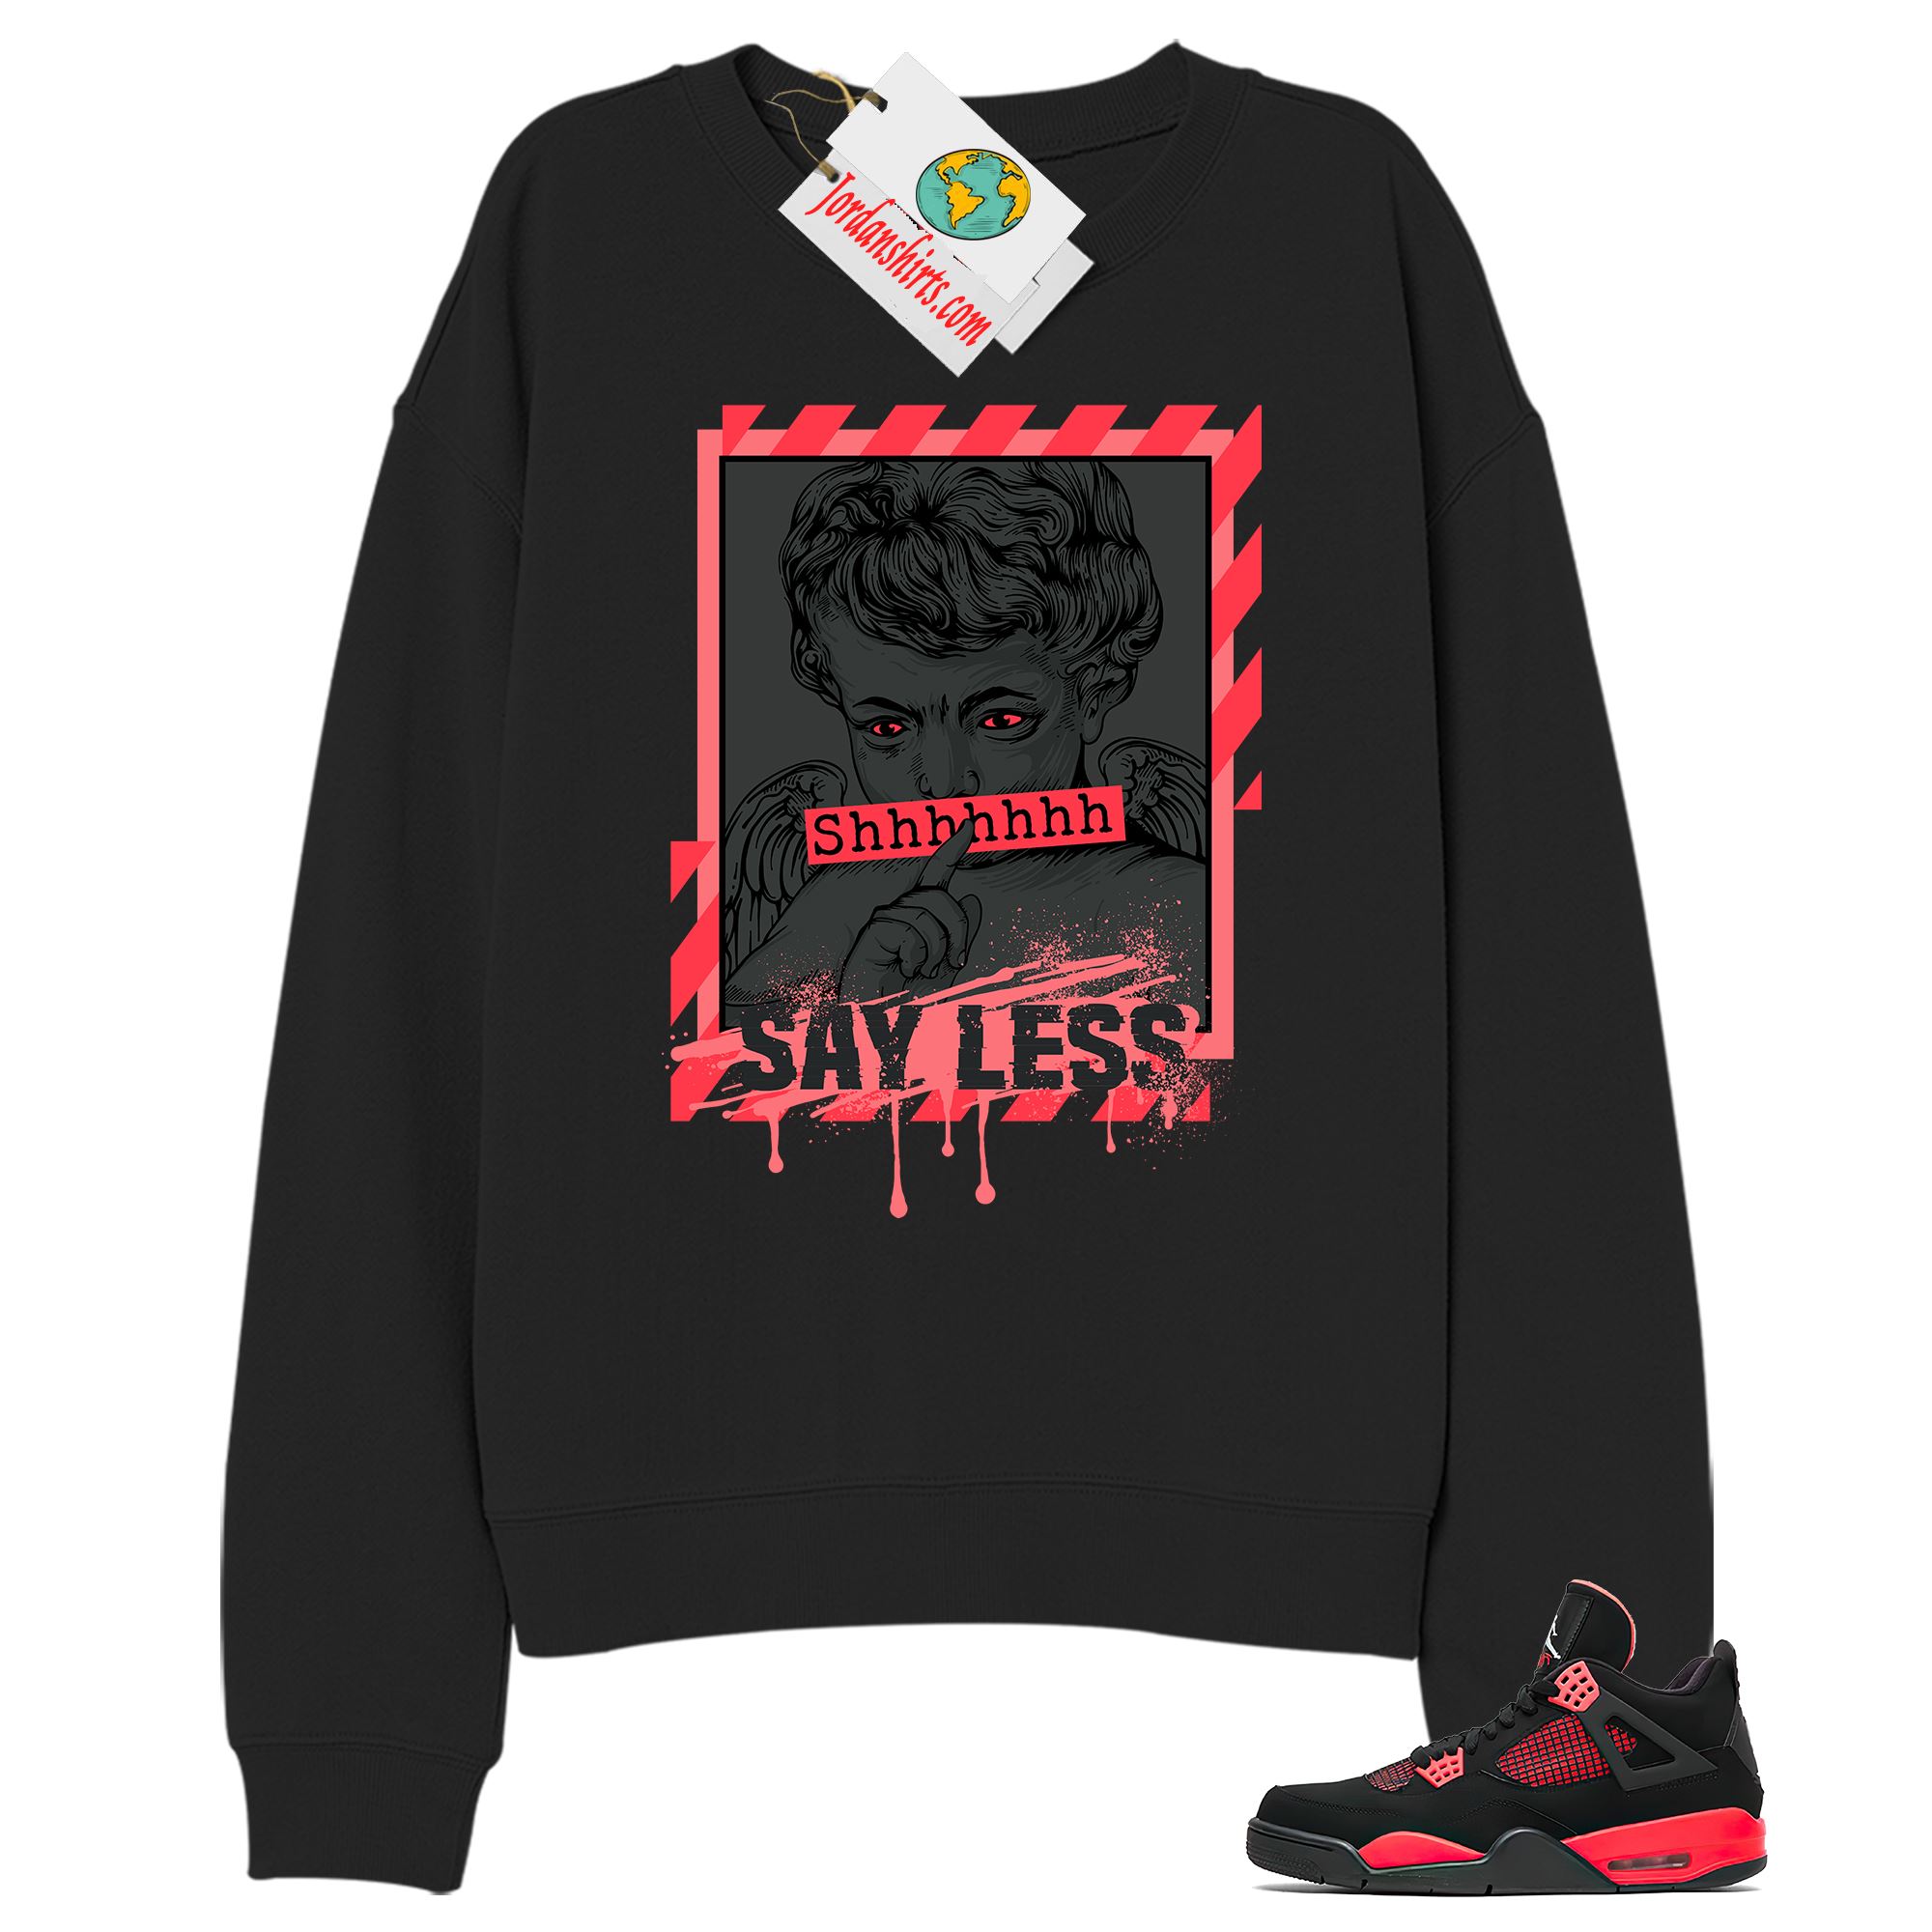 Jordan 4 Sweatshirt, Say Less Angel Black Sweatshirt Air Jordan 4 Red Thunder 4s Full Size Up To 5xl